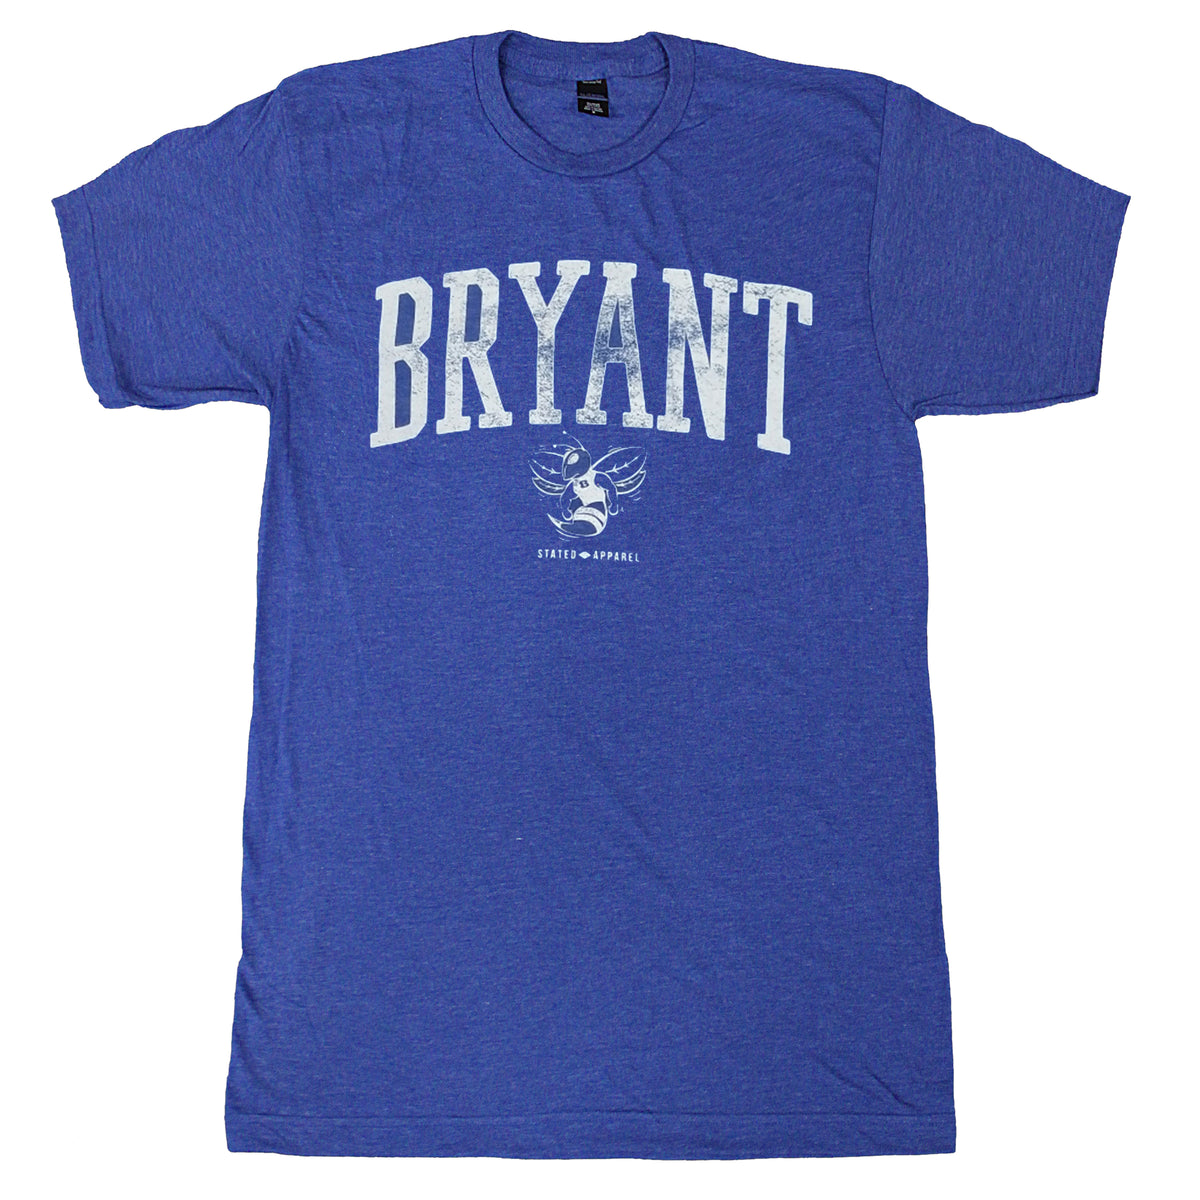 Bryant Tall Arch w/ Hornet T-Shirt